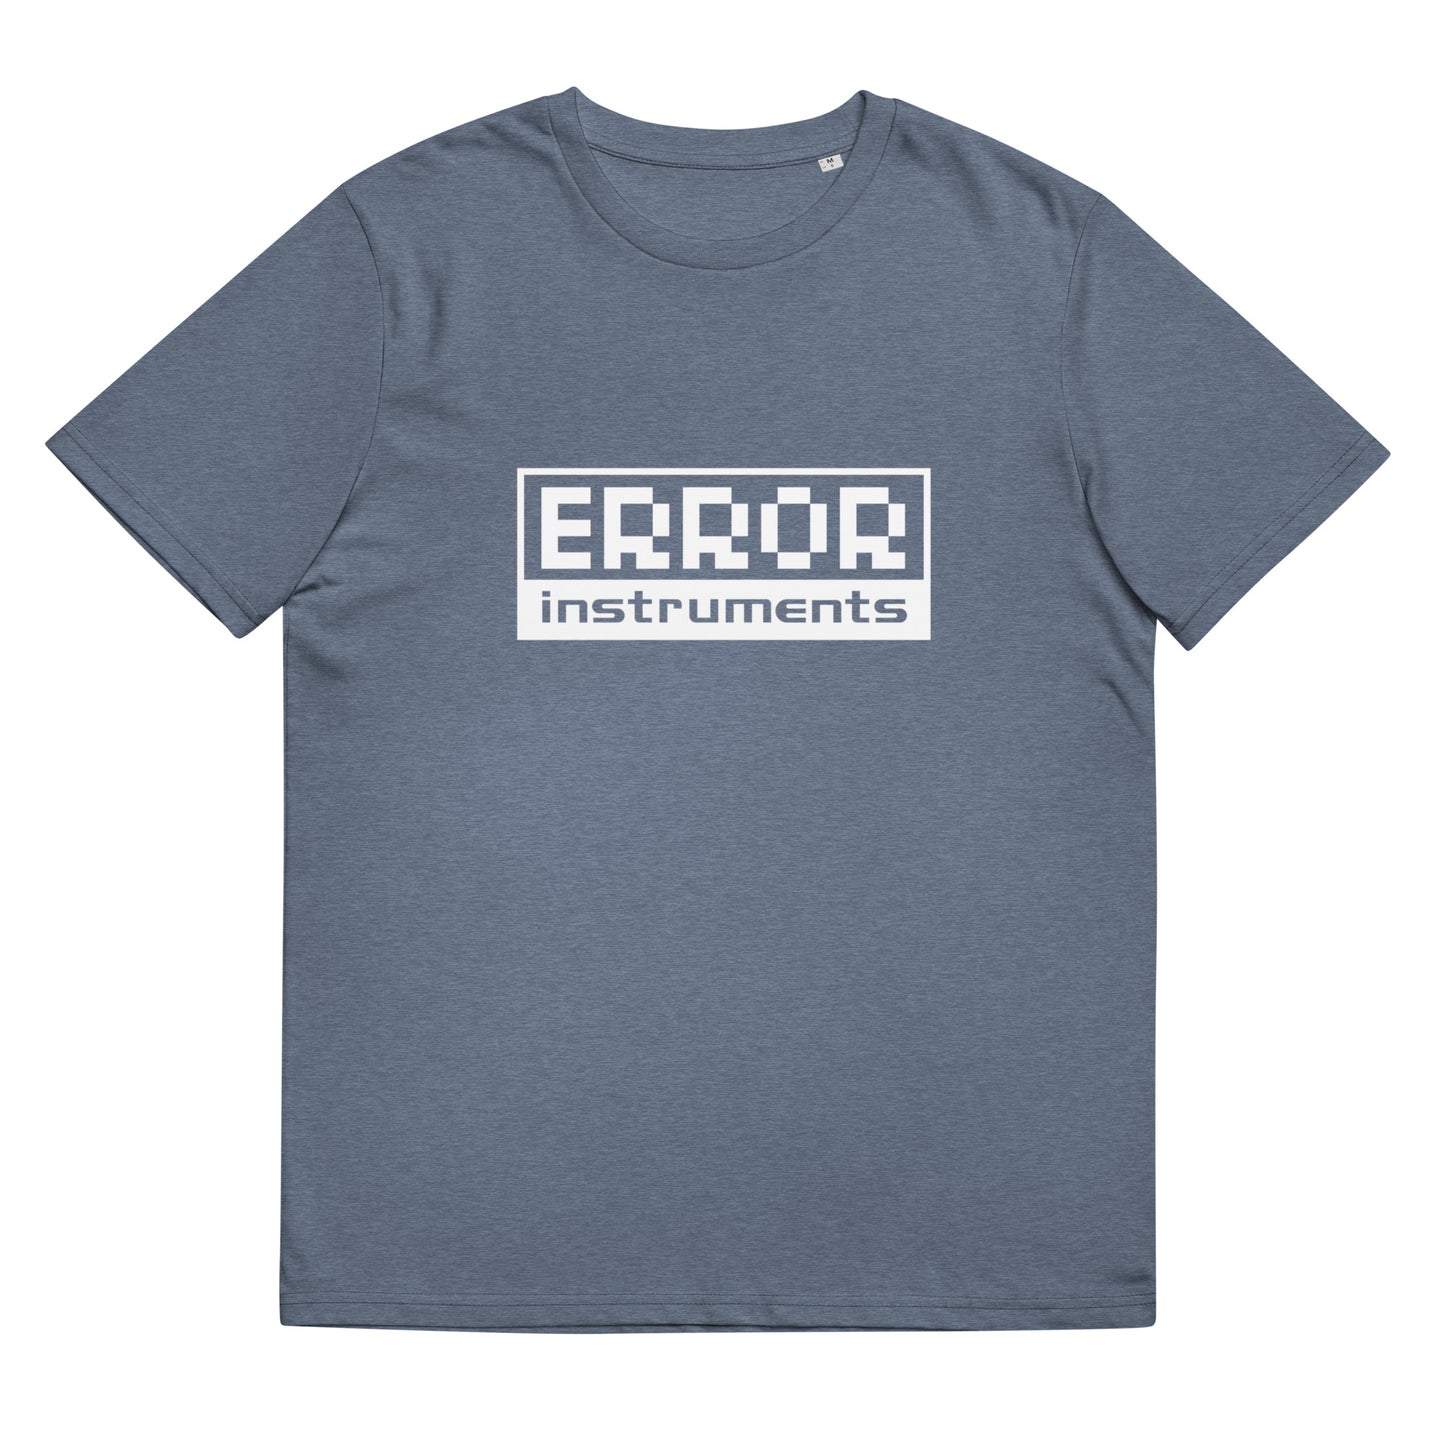 Error Instruments Unisex organic cotton t-shirt